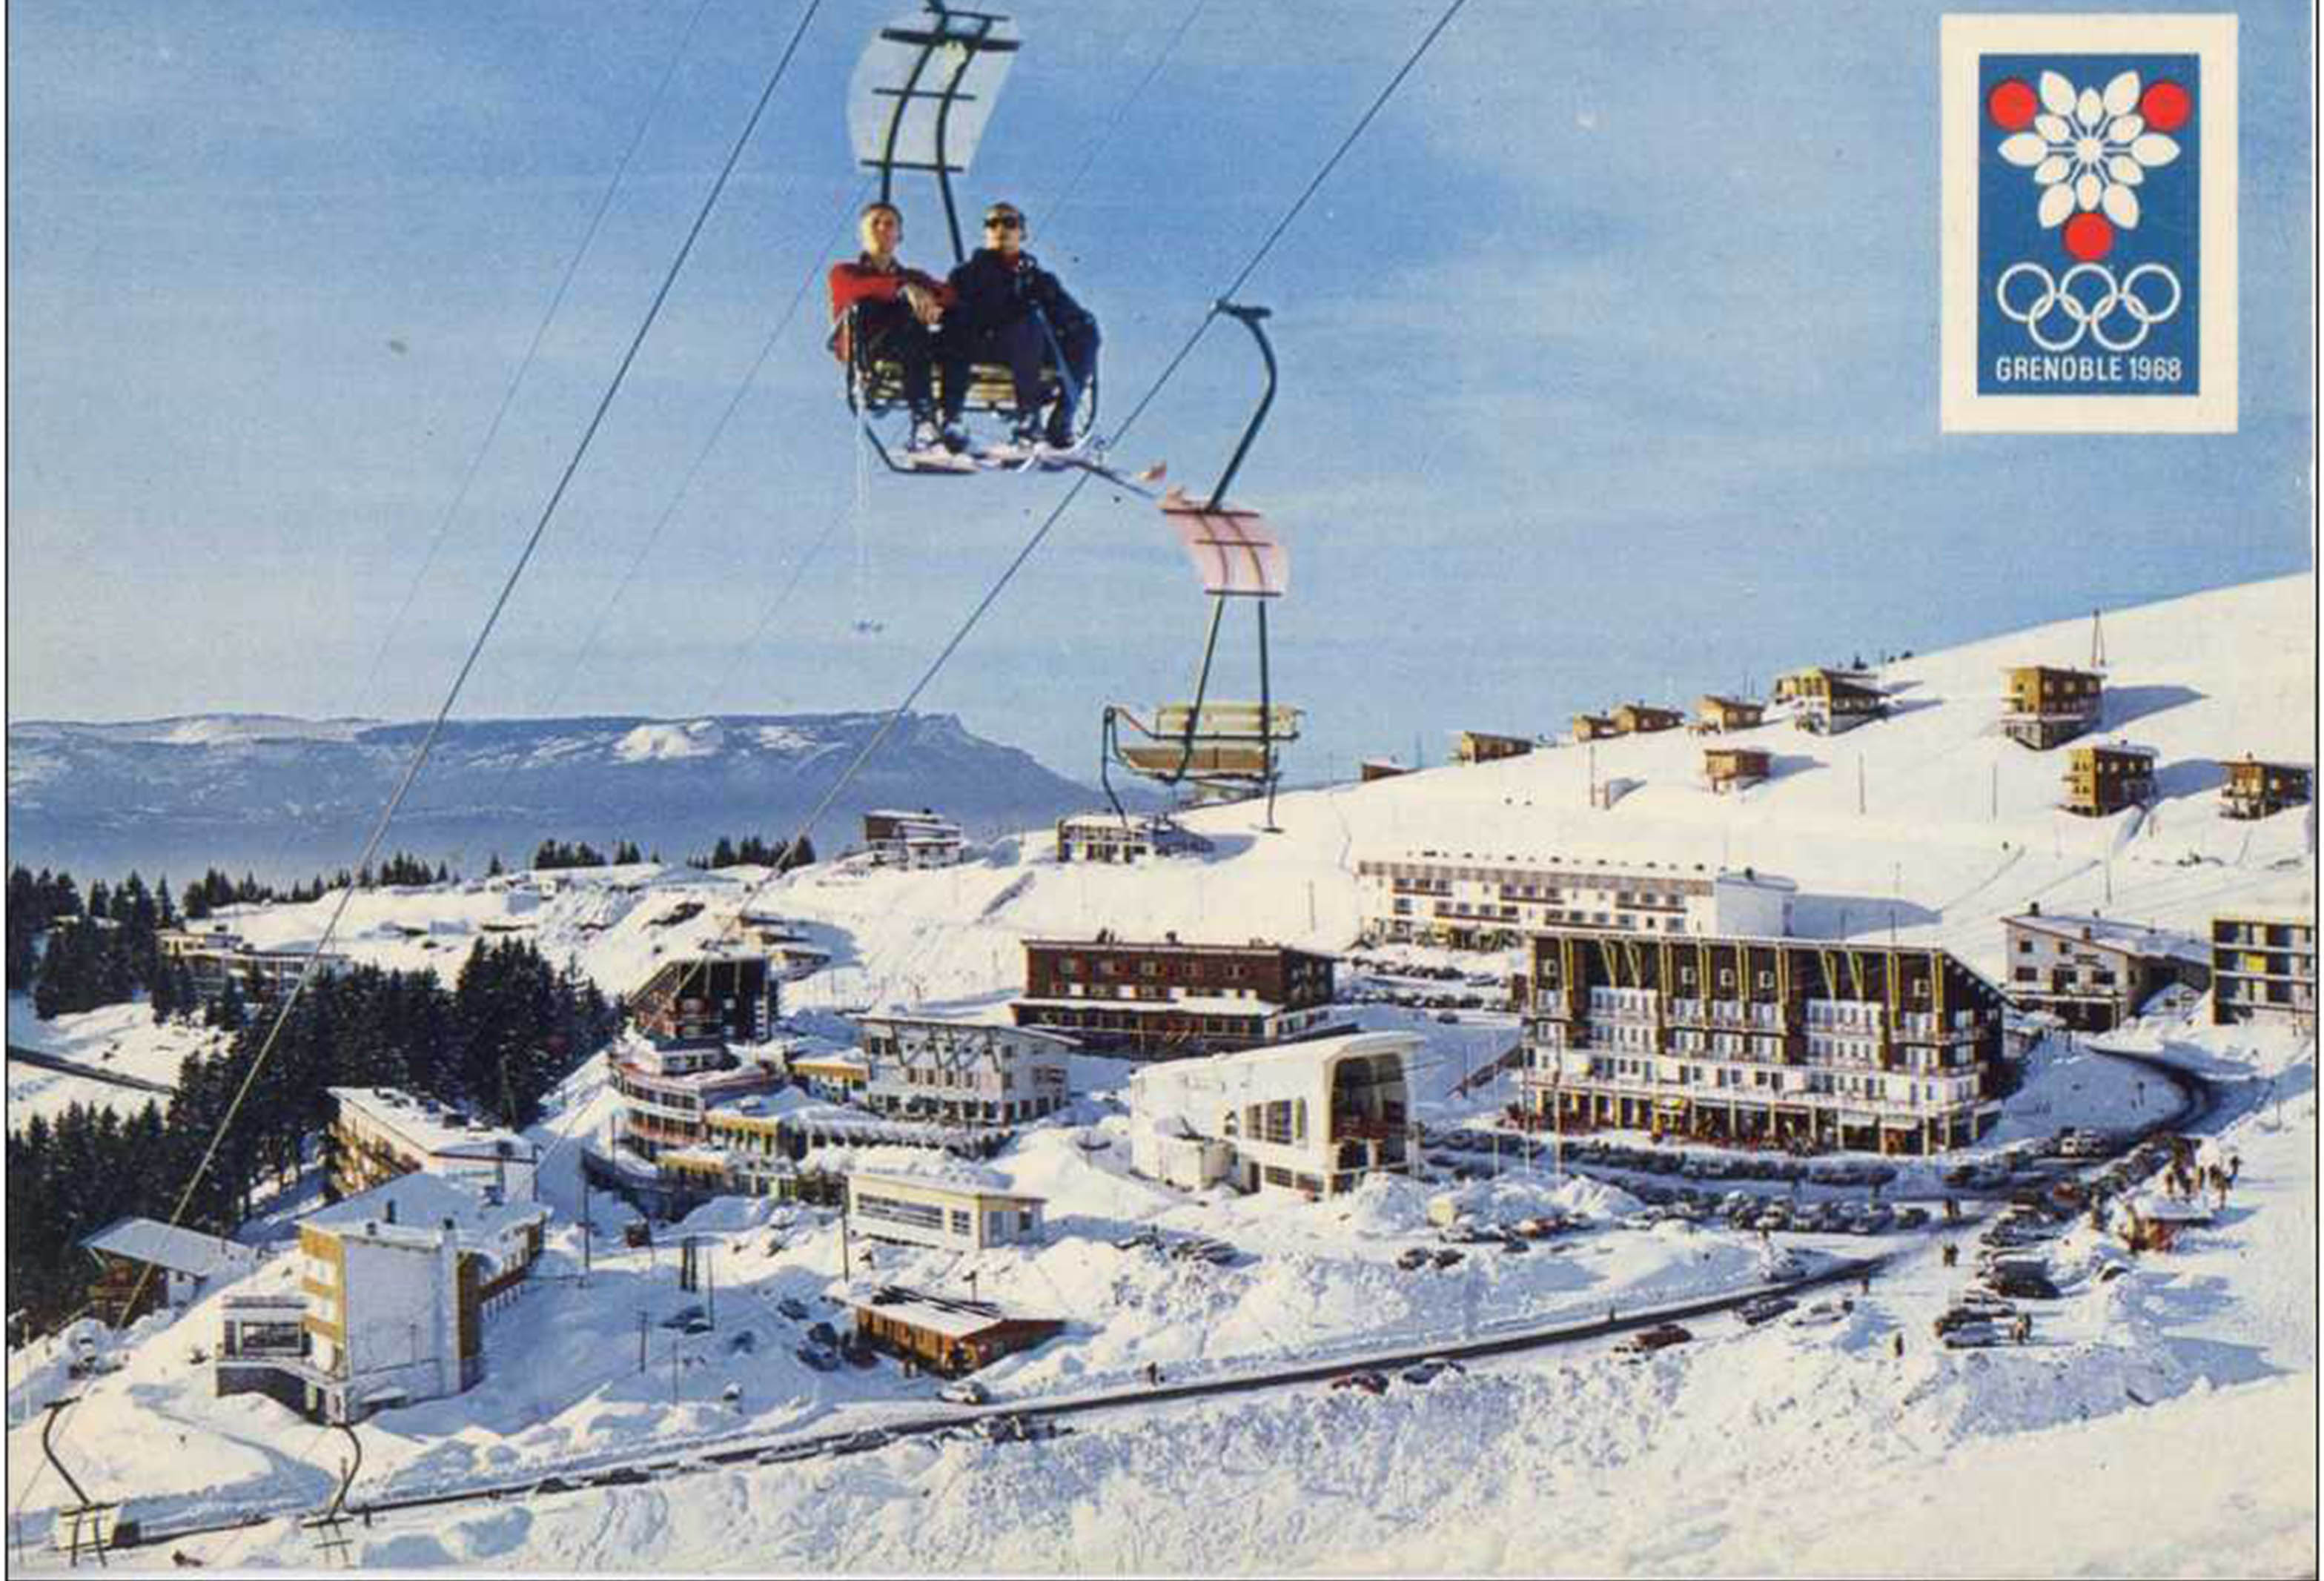 Chamrousse jeux olympiques hiver JO 1969 grenoble station ski montagne grenoble isère alpes france - © Editions André